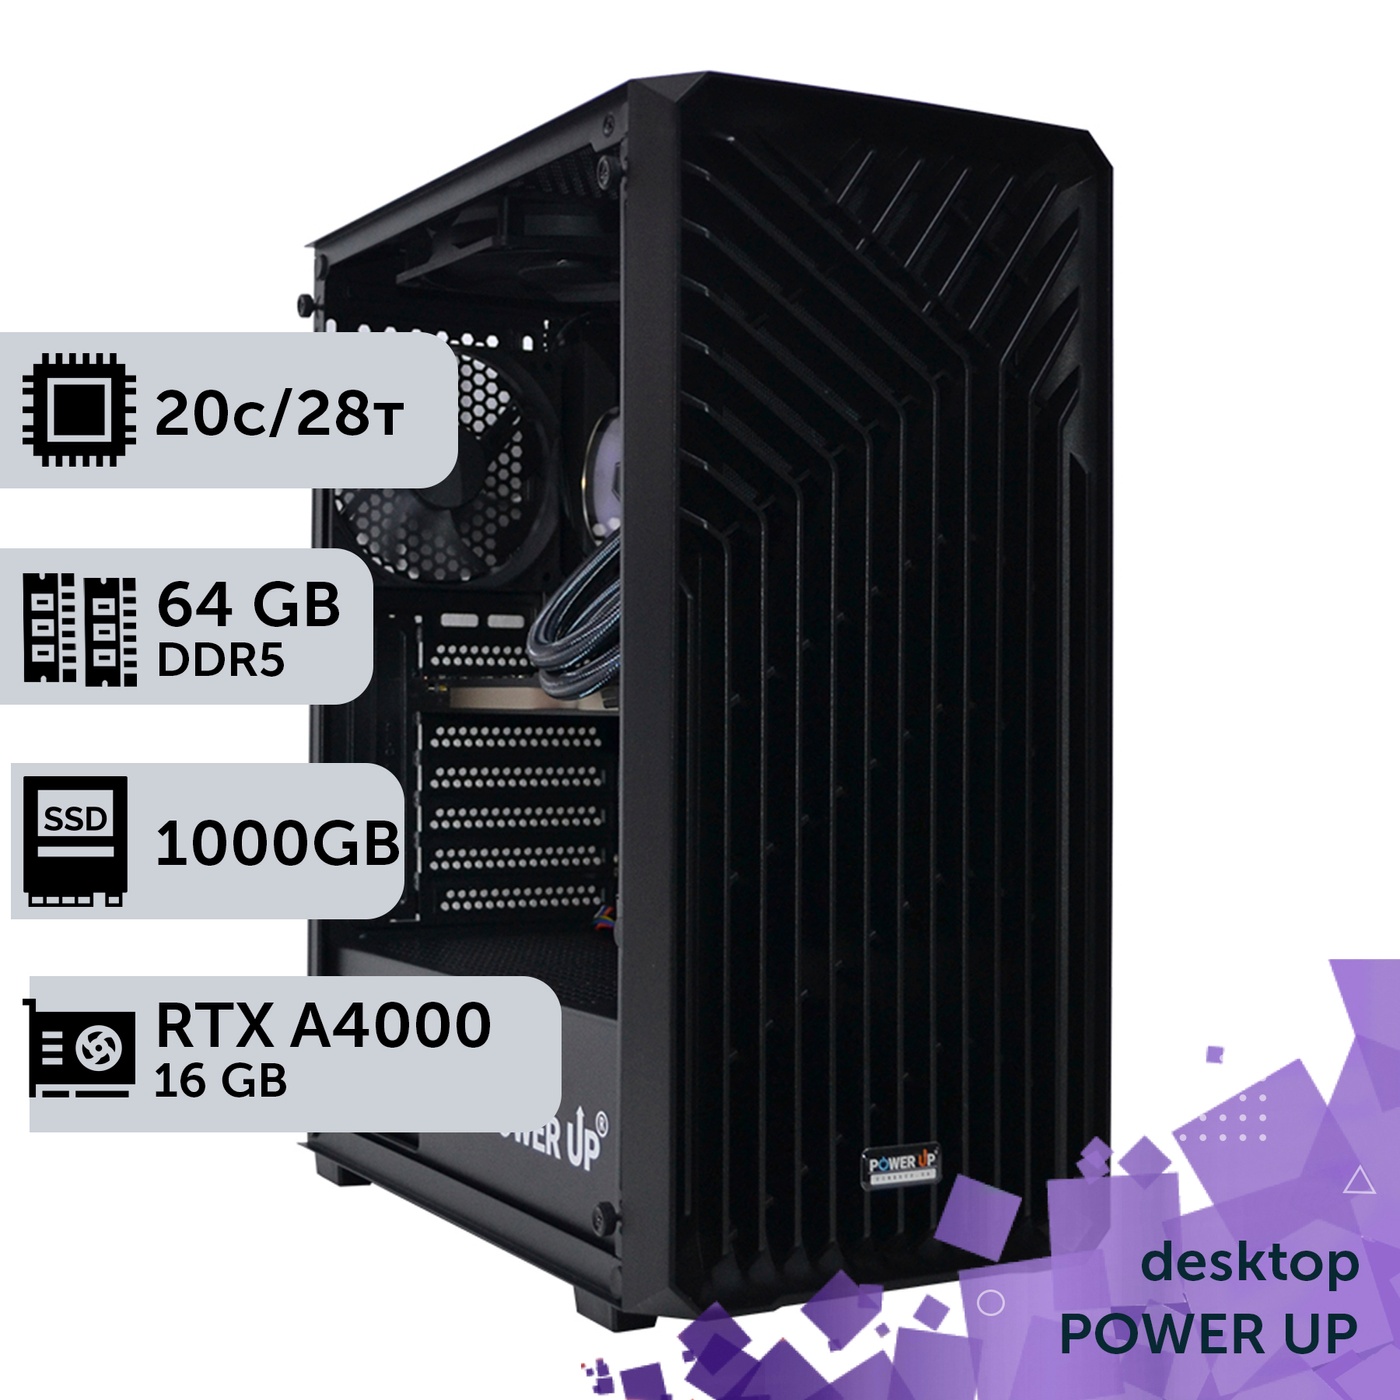 Робоча станція PowerUp Desktop #349 Core i7 14700K/64 GB/SSD 1TB/NVIDIA Quadro RTX A4000 16GB